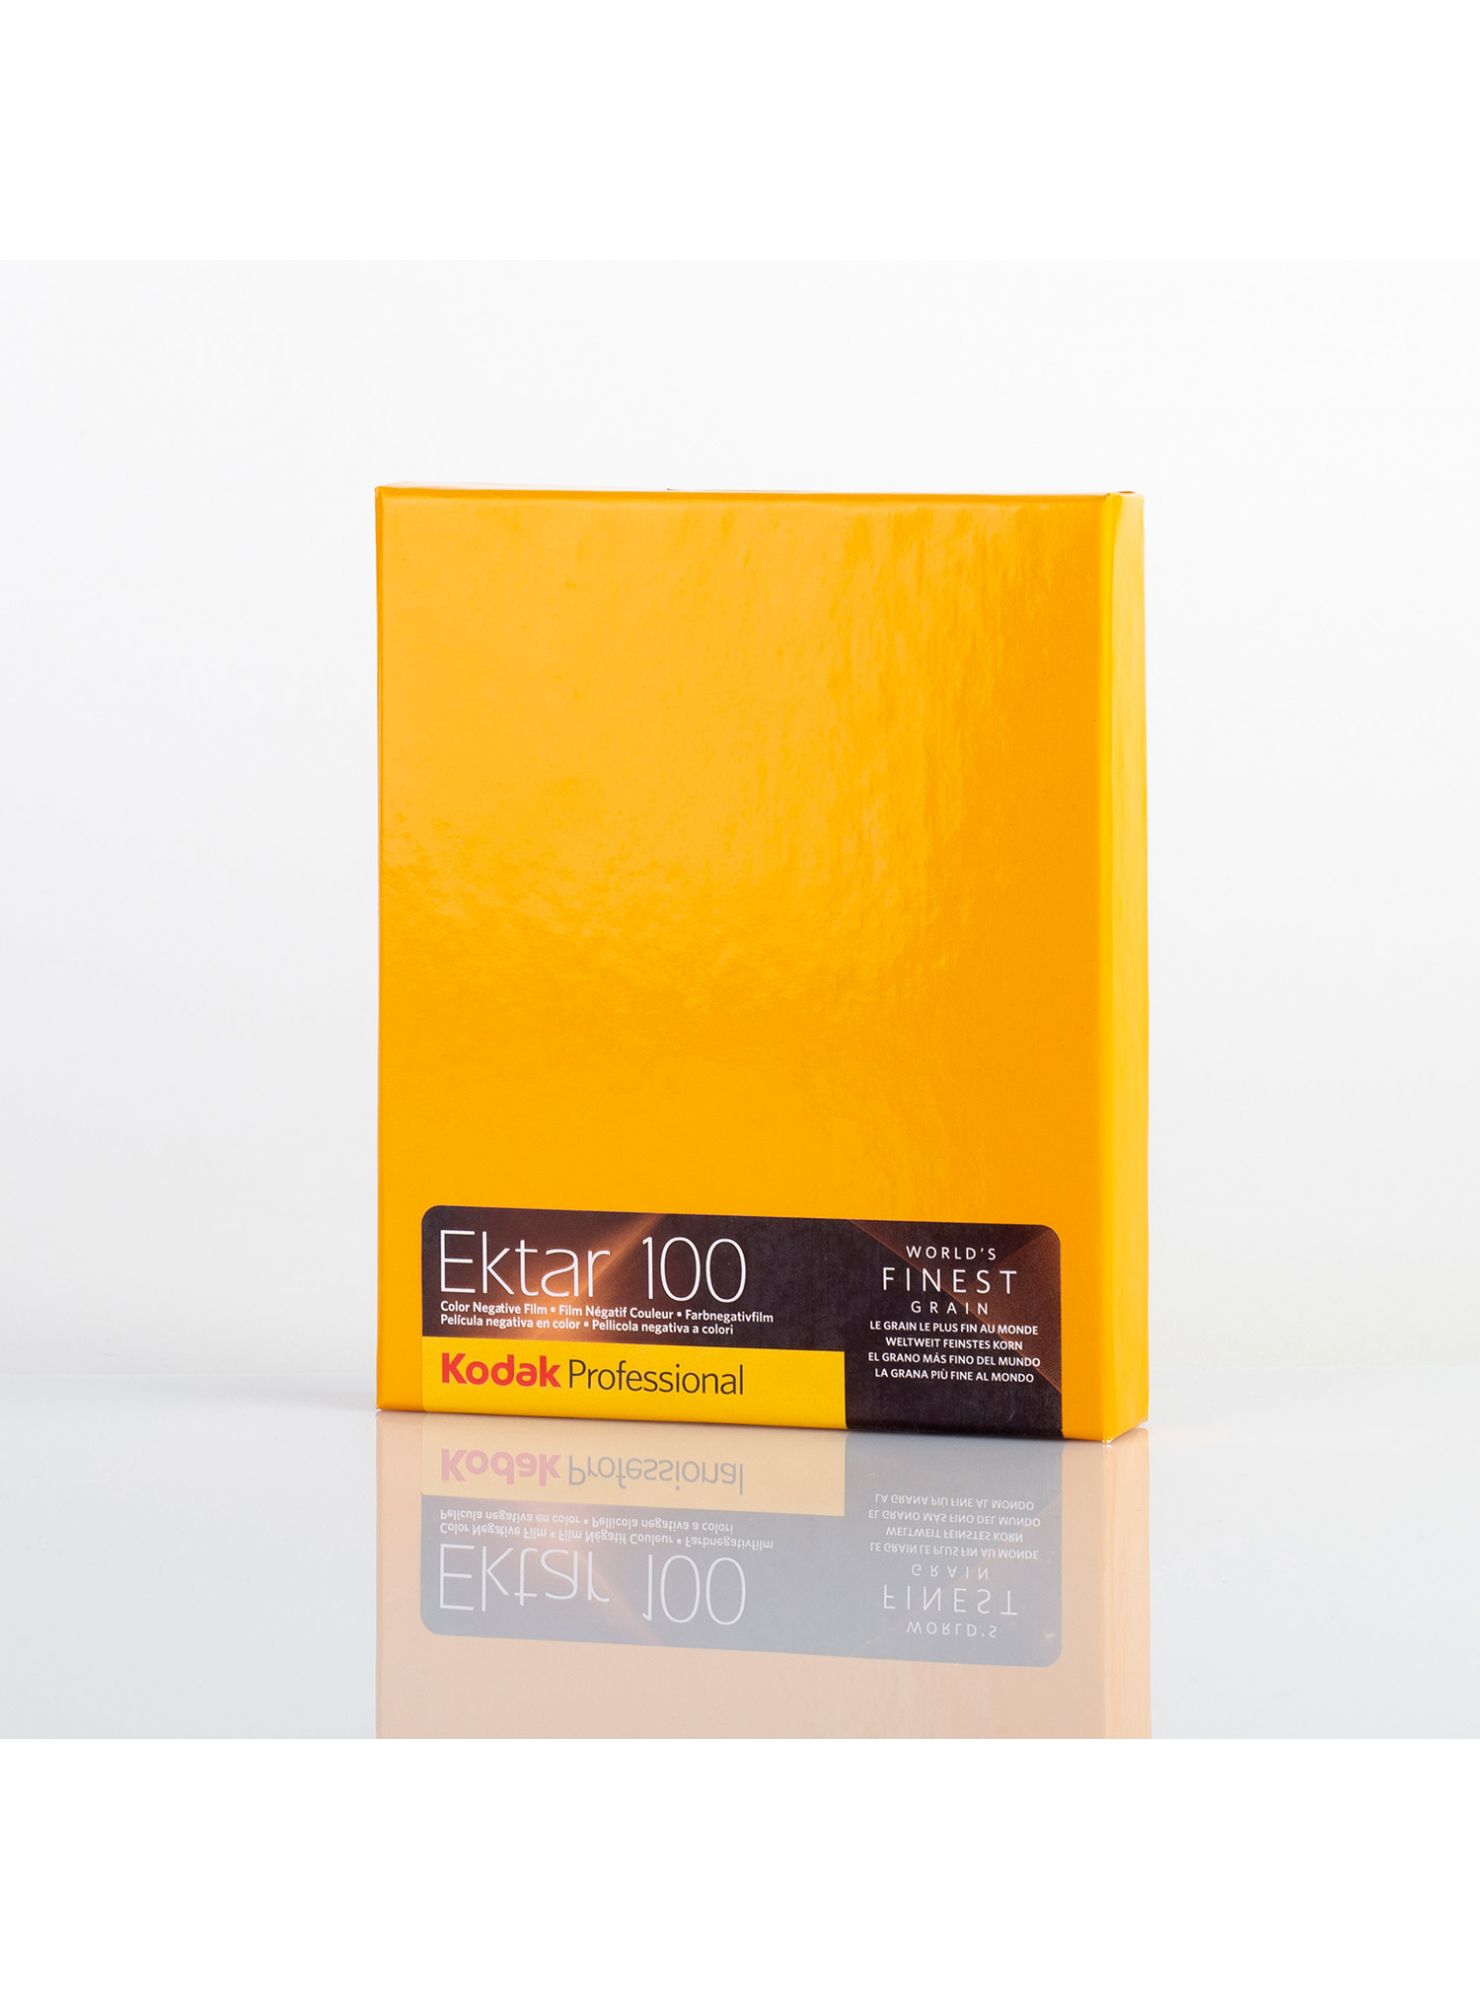 KODAK Ektar 100 - 10 plan-films 4x5 inchs